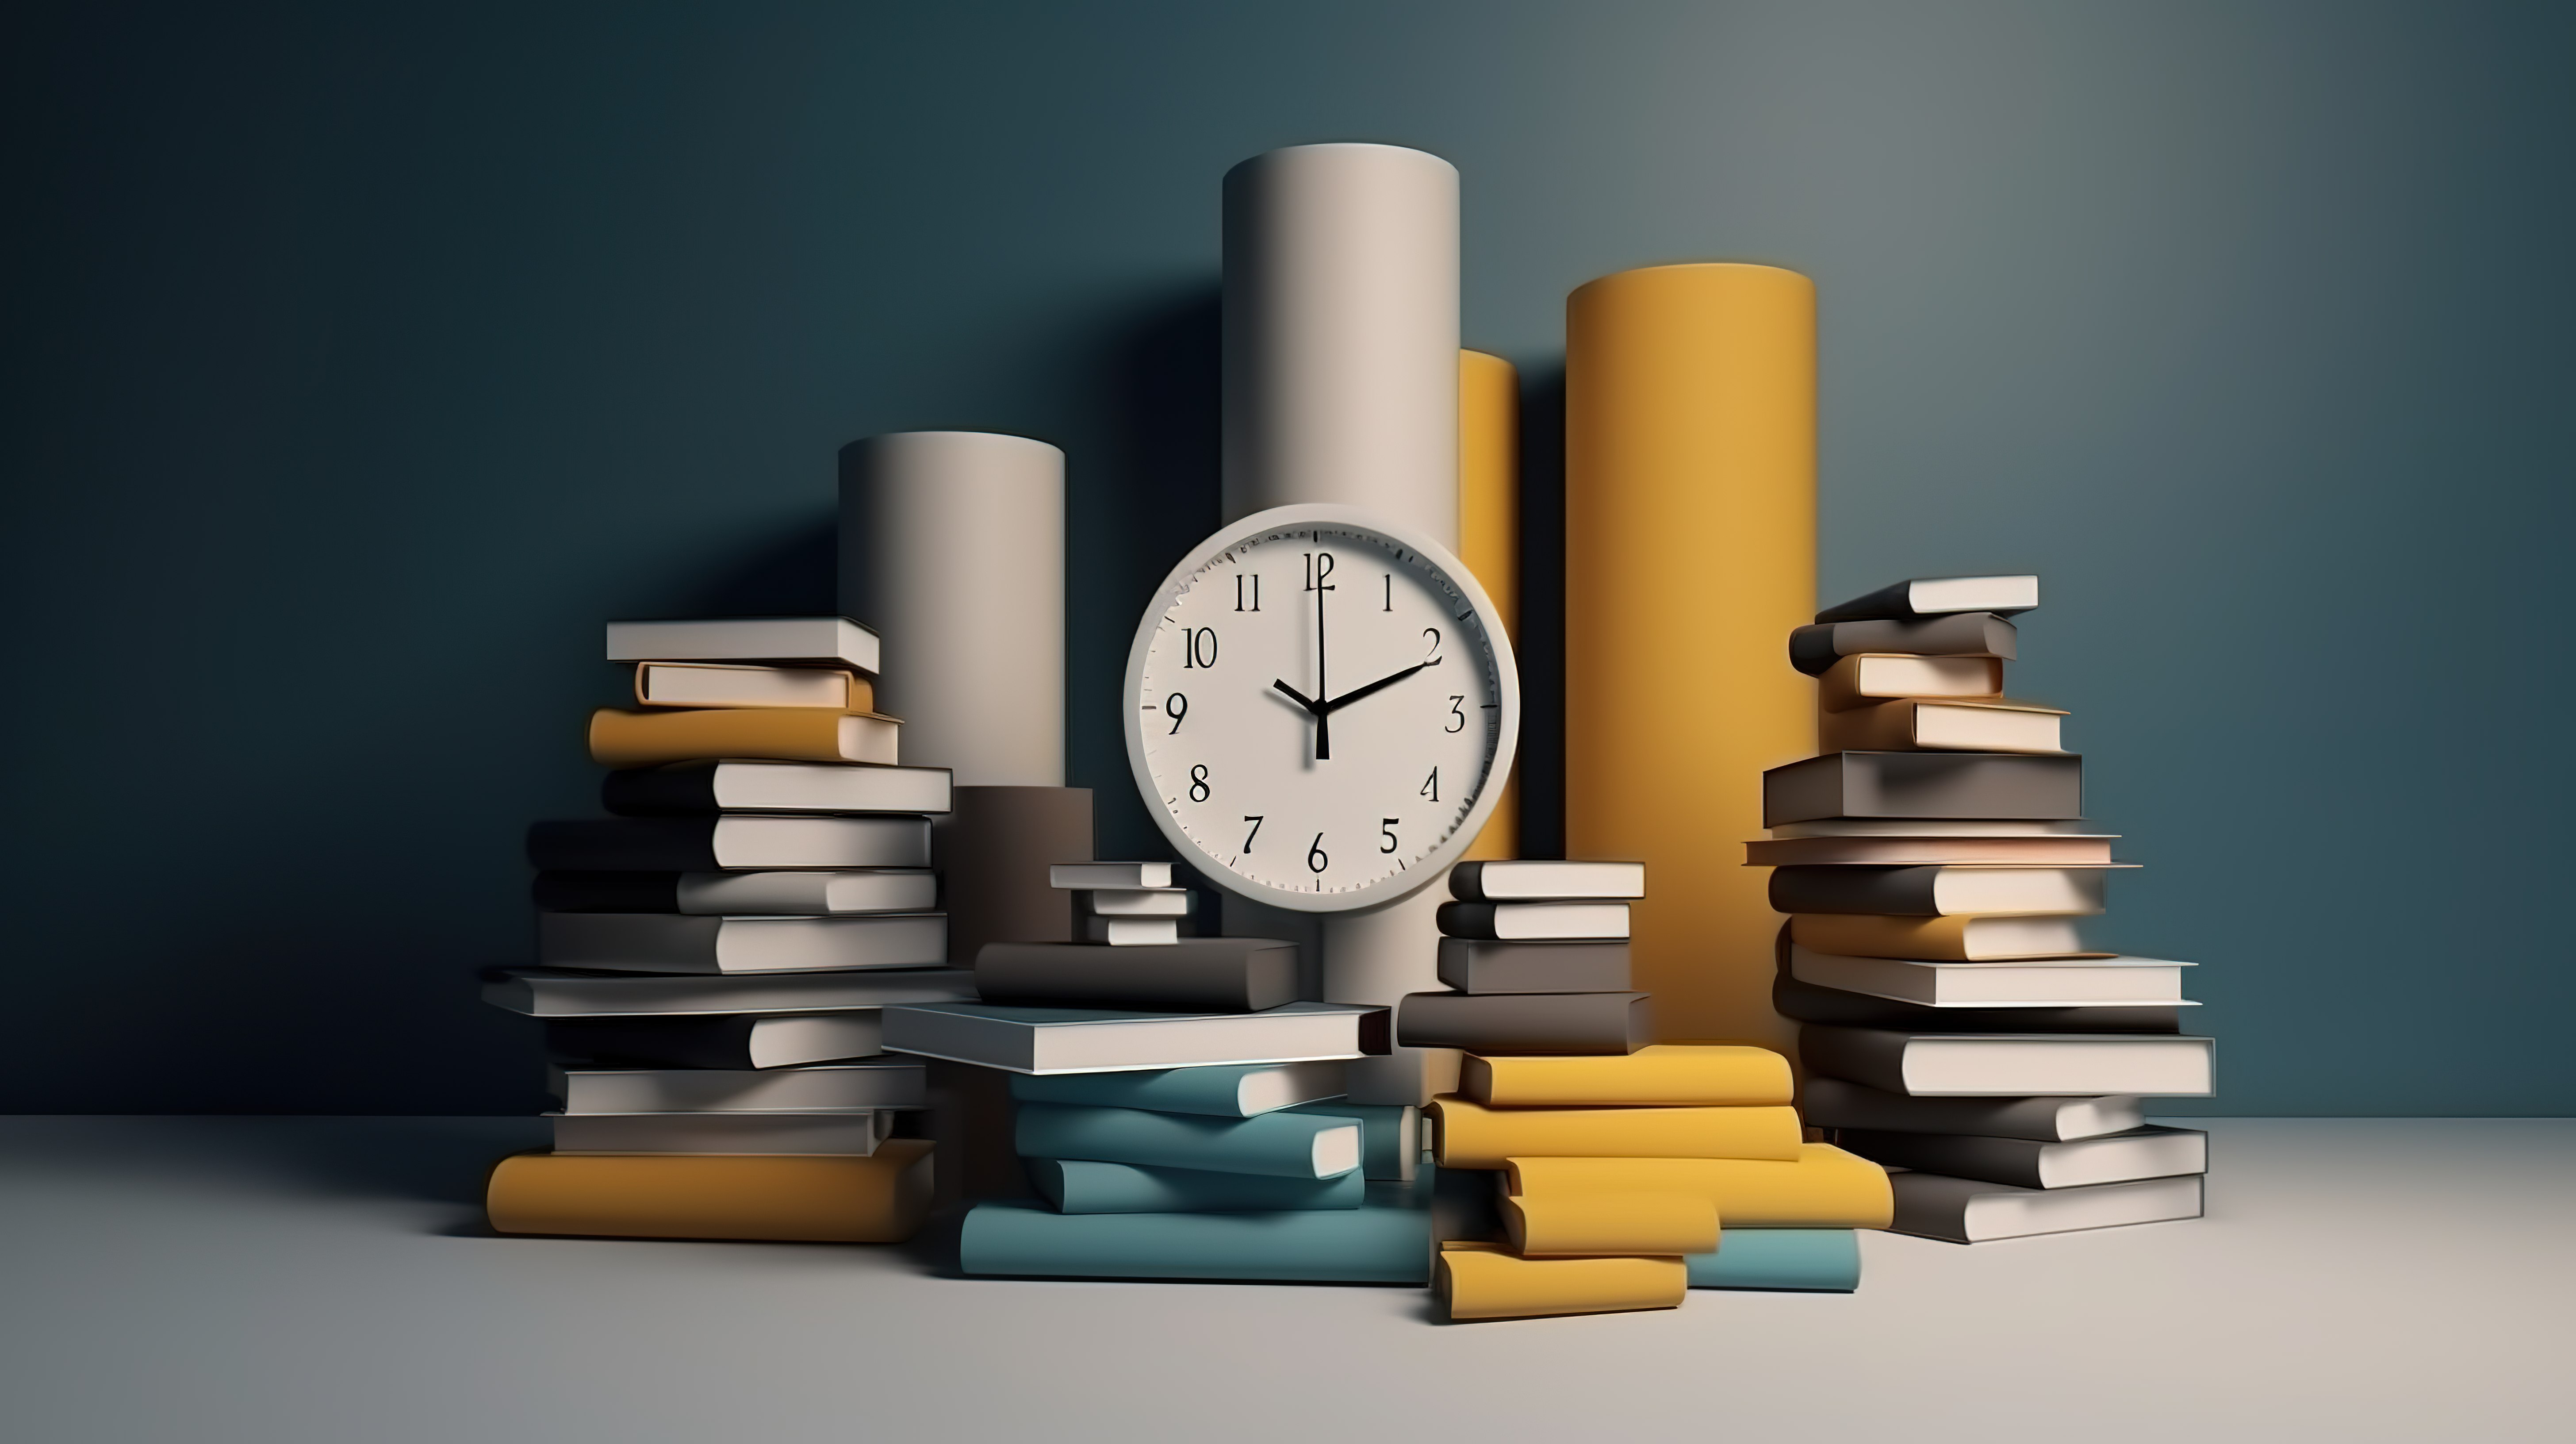 3d 渲染中时钟和书籍的极简主义插图图片